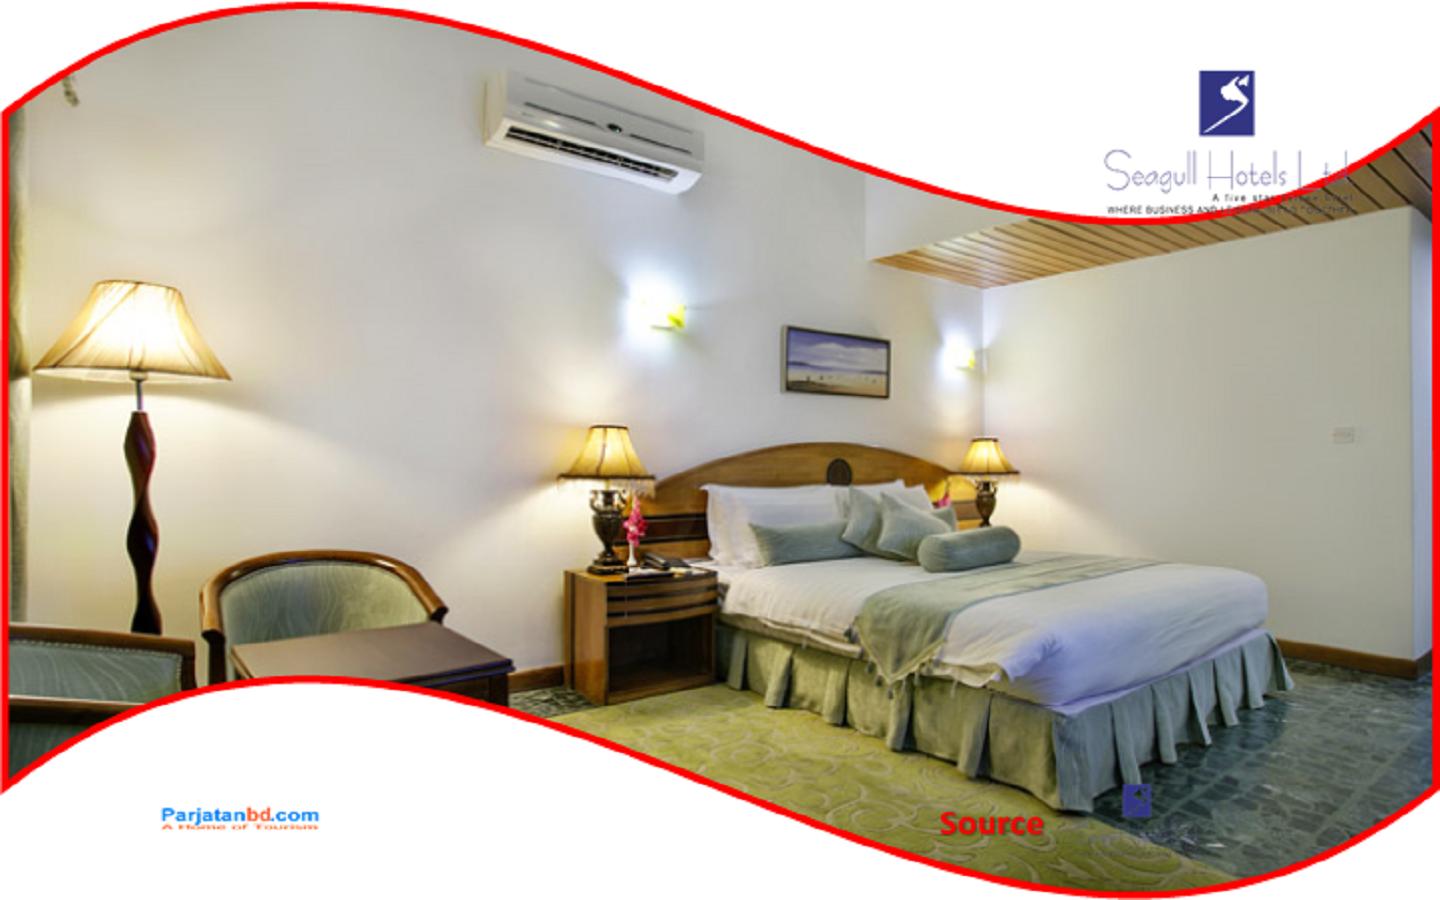 Room Madhurima Suite -1, Seagull Hotel